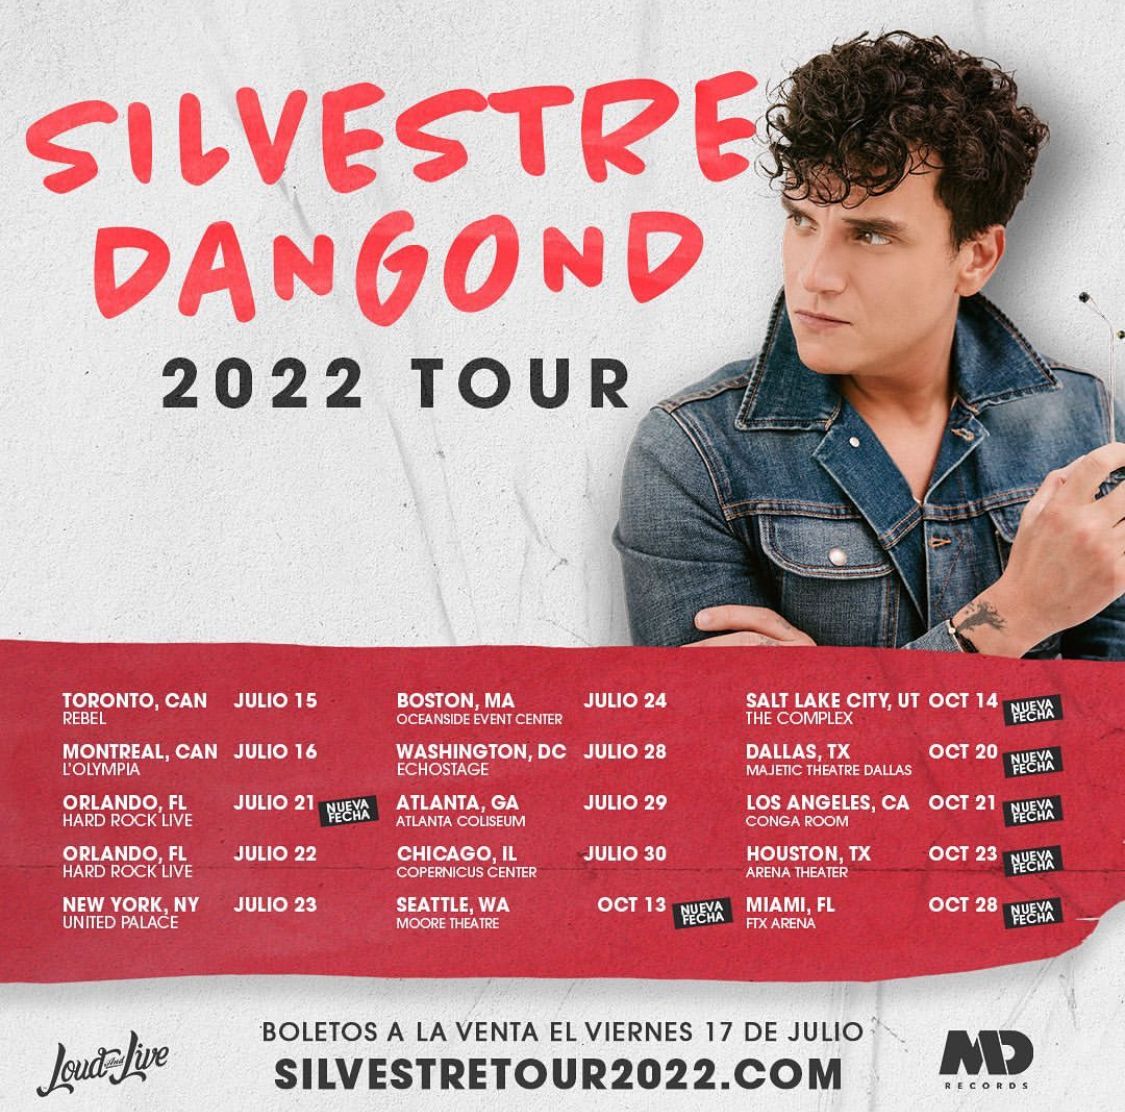 SILVESTRE DANGOND anuncia fechas de su “2022 Tour”